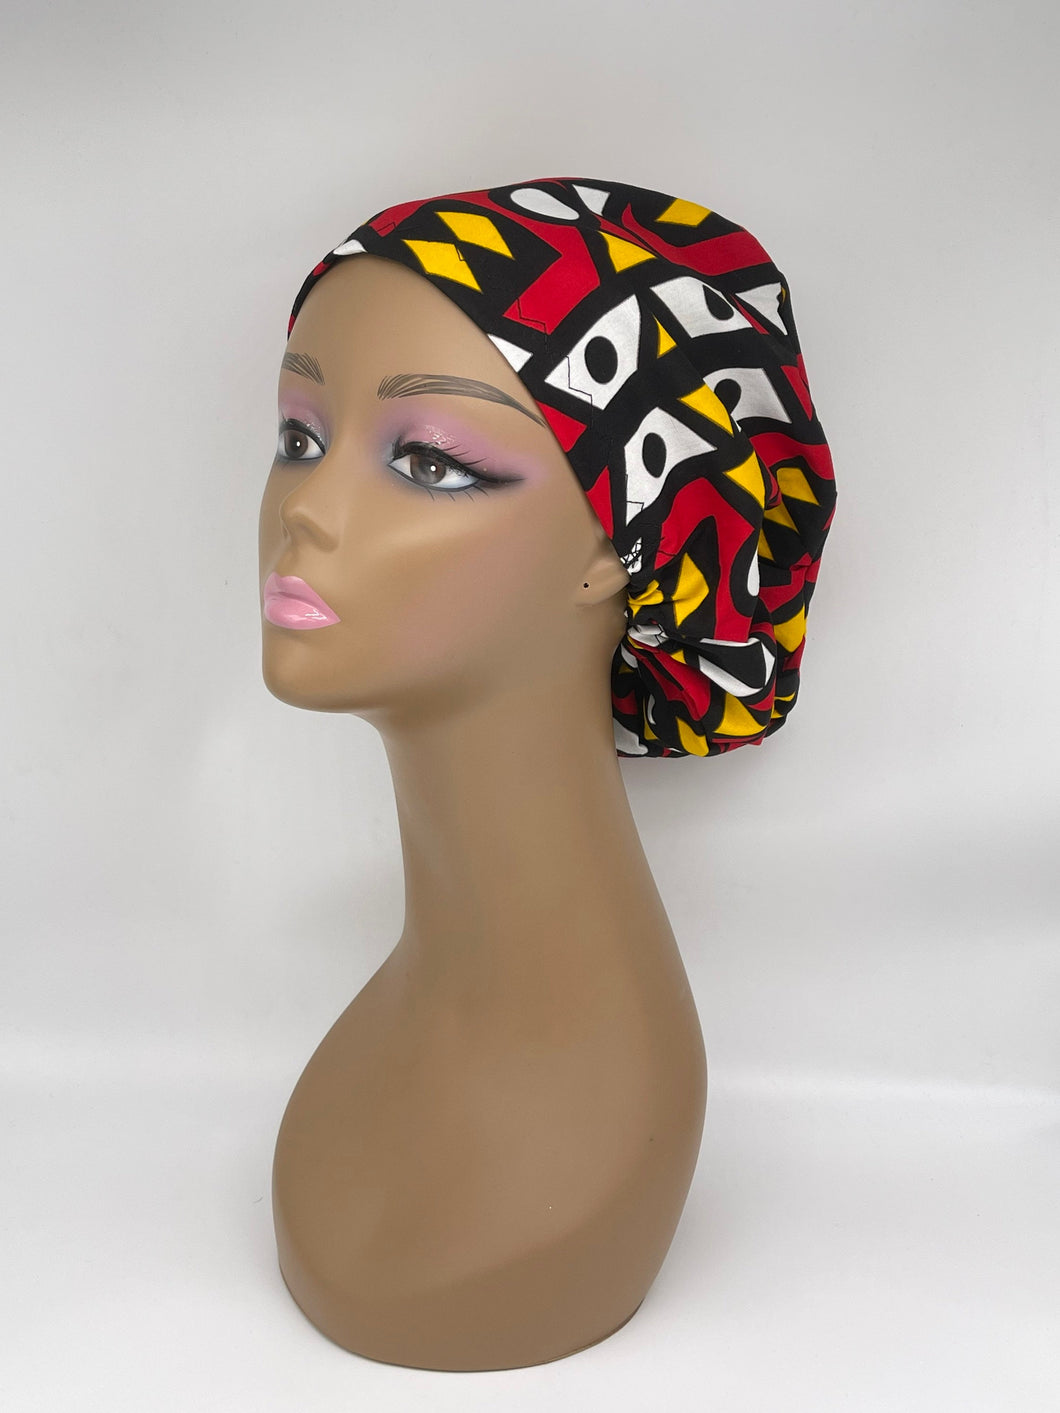 Niceroy surgical SCRUB HAT CAP,  Ankara Europe style nursing caps made with African fabric and satin lining option Angola Samakaka